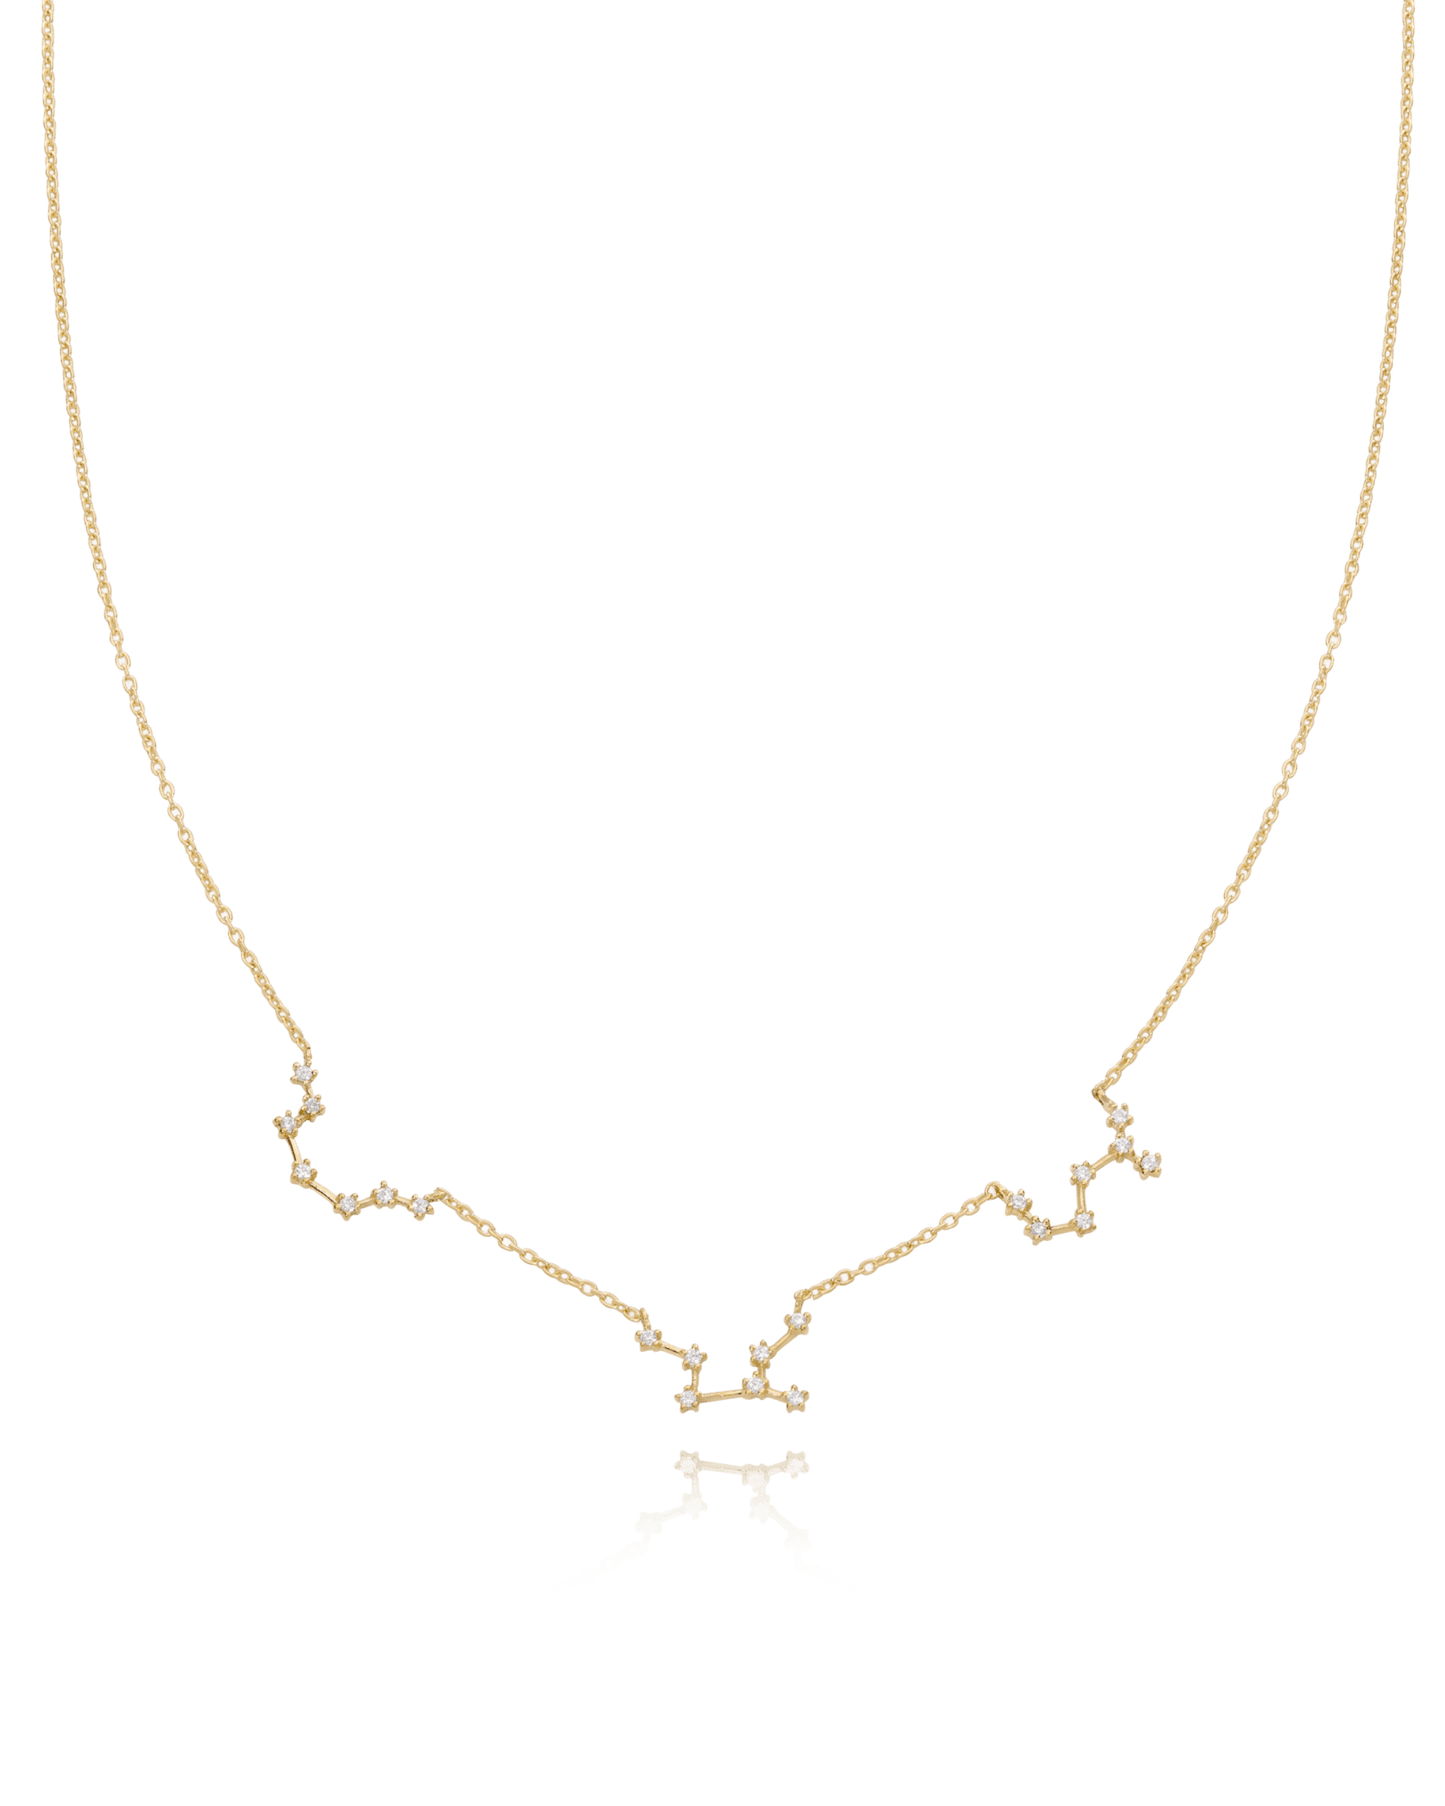 Sets of Constellation Necklaces - 18K Gold Vermeil Necklaces magal-dev 1 Constellation 